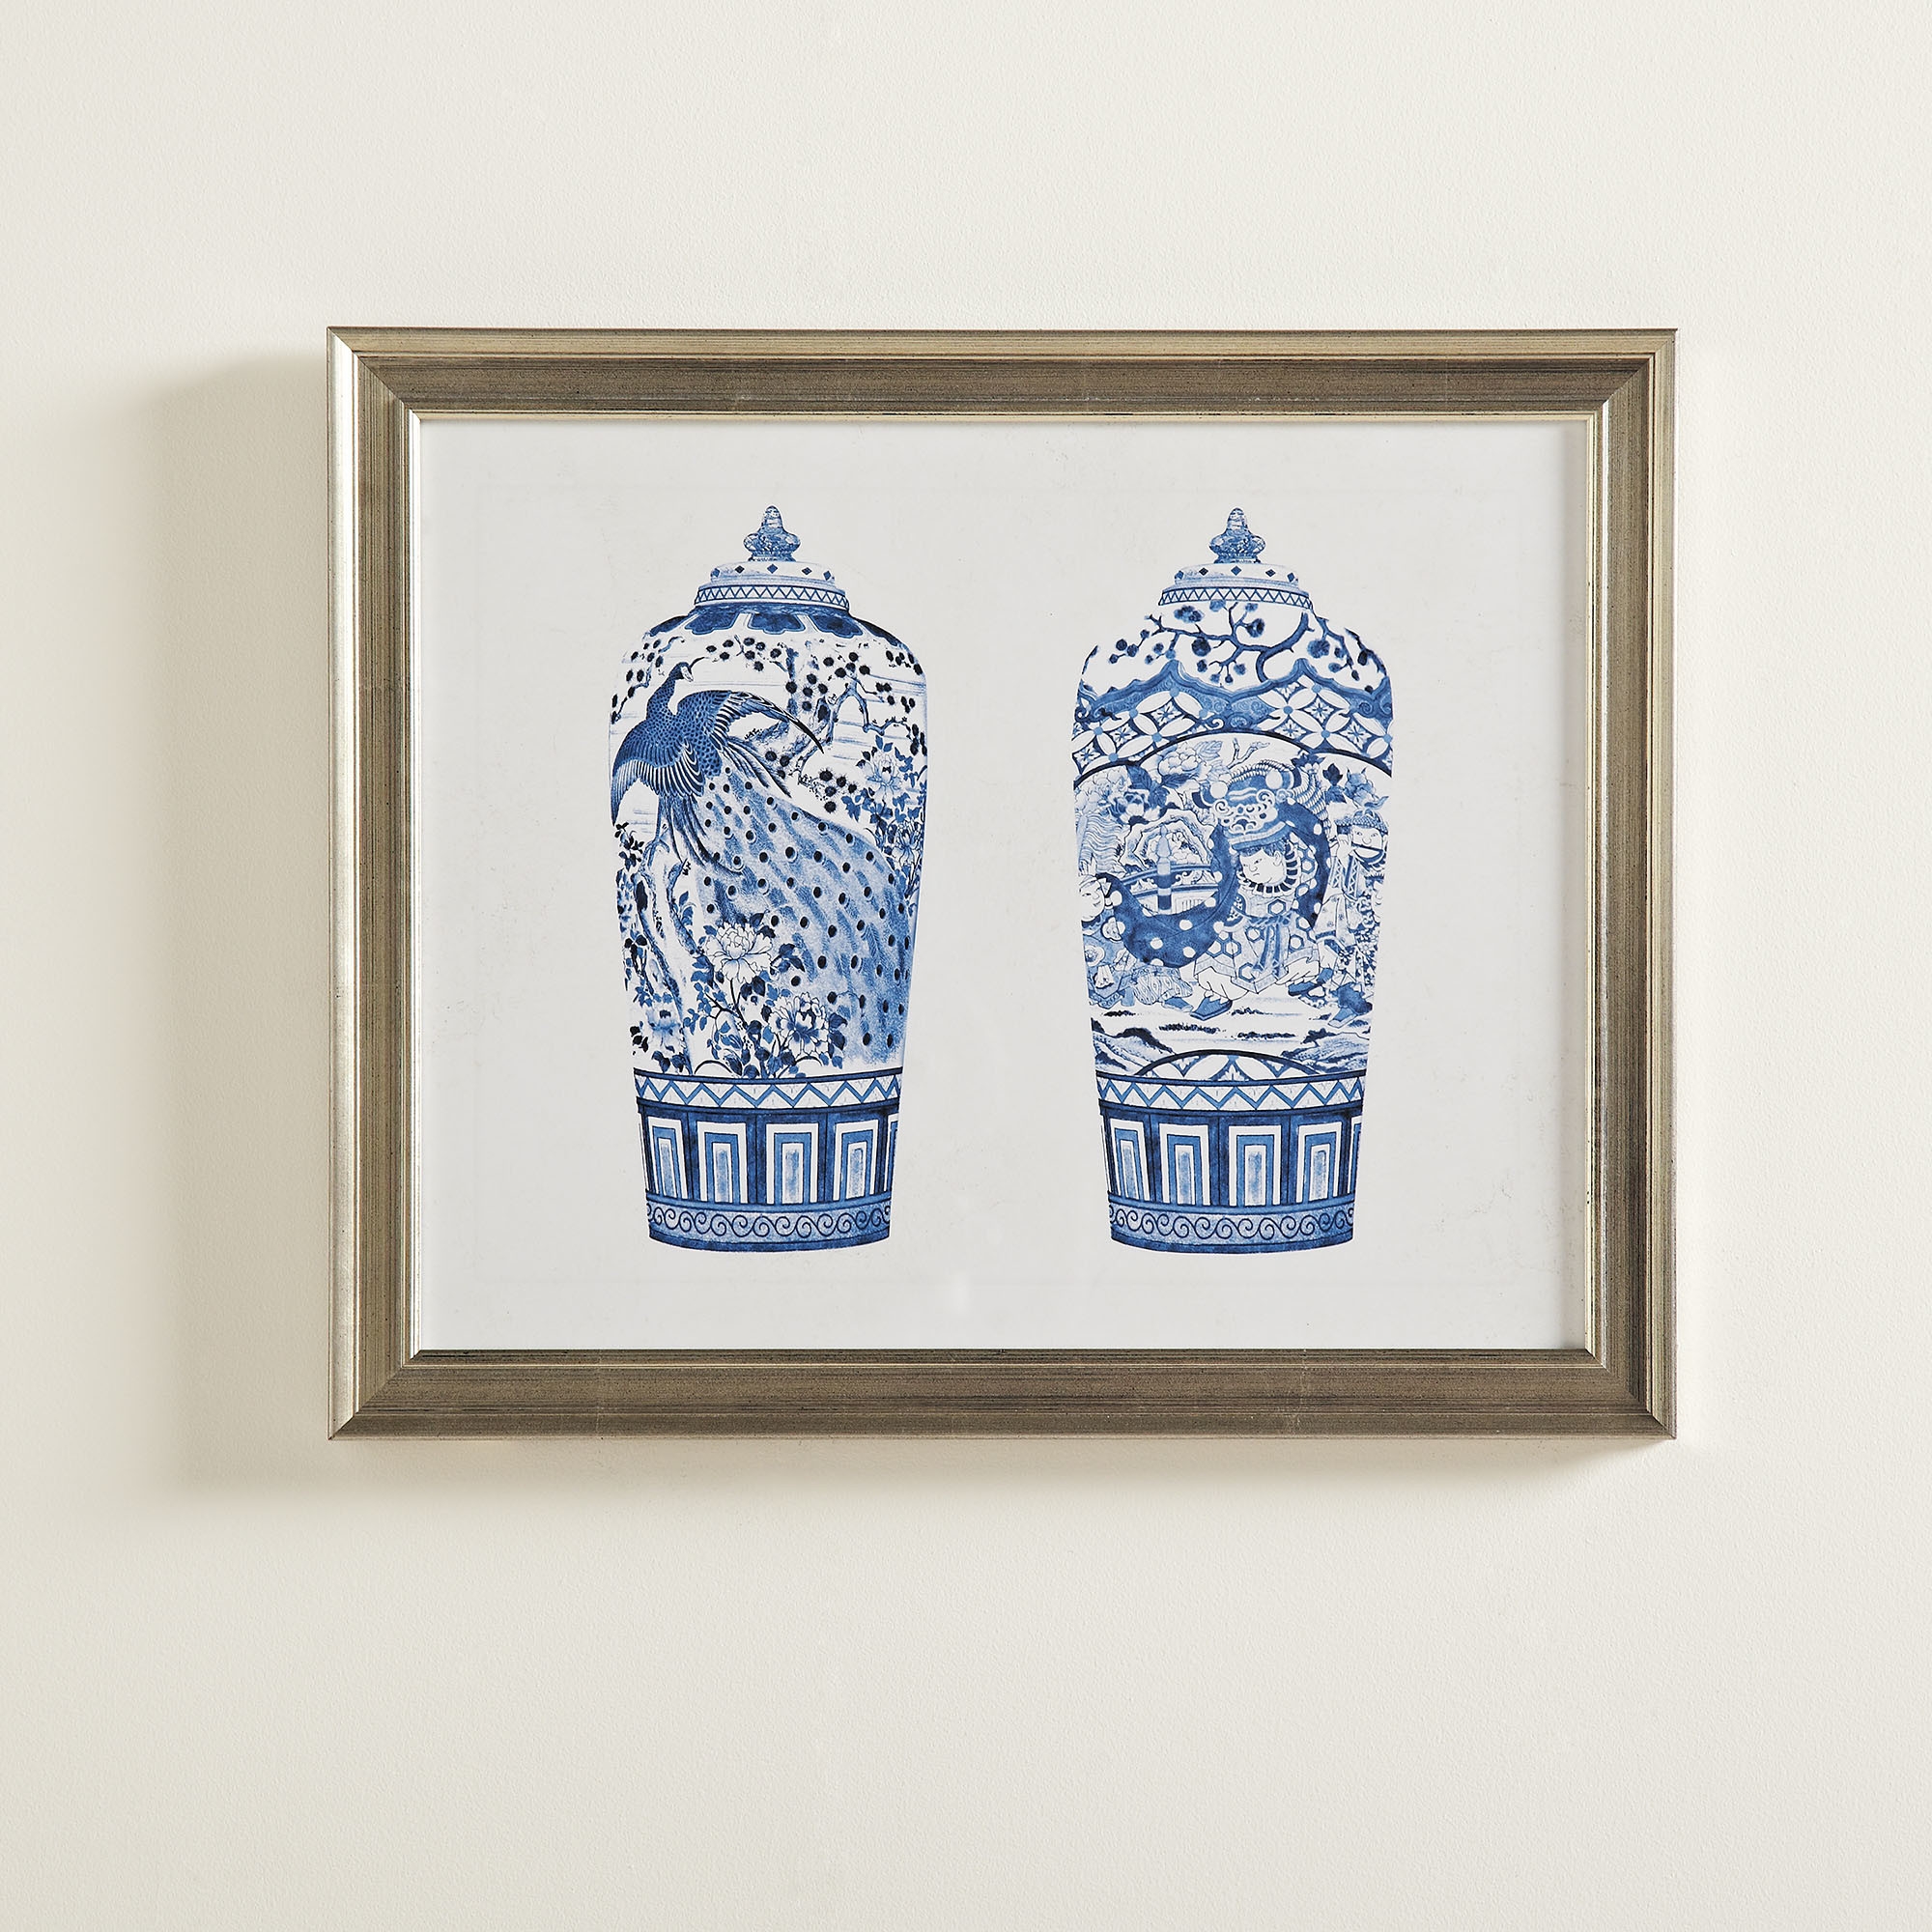 Porcelain Vase Duo Framed Painting Print 1 - Image 0